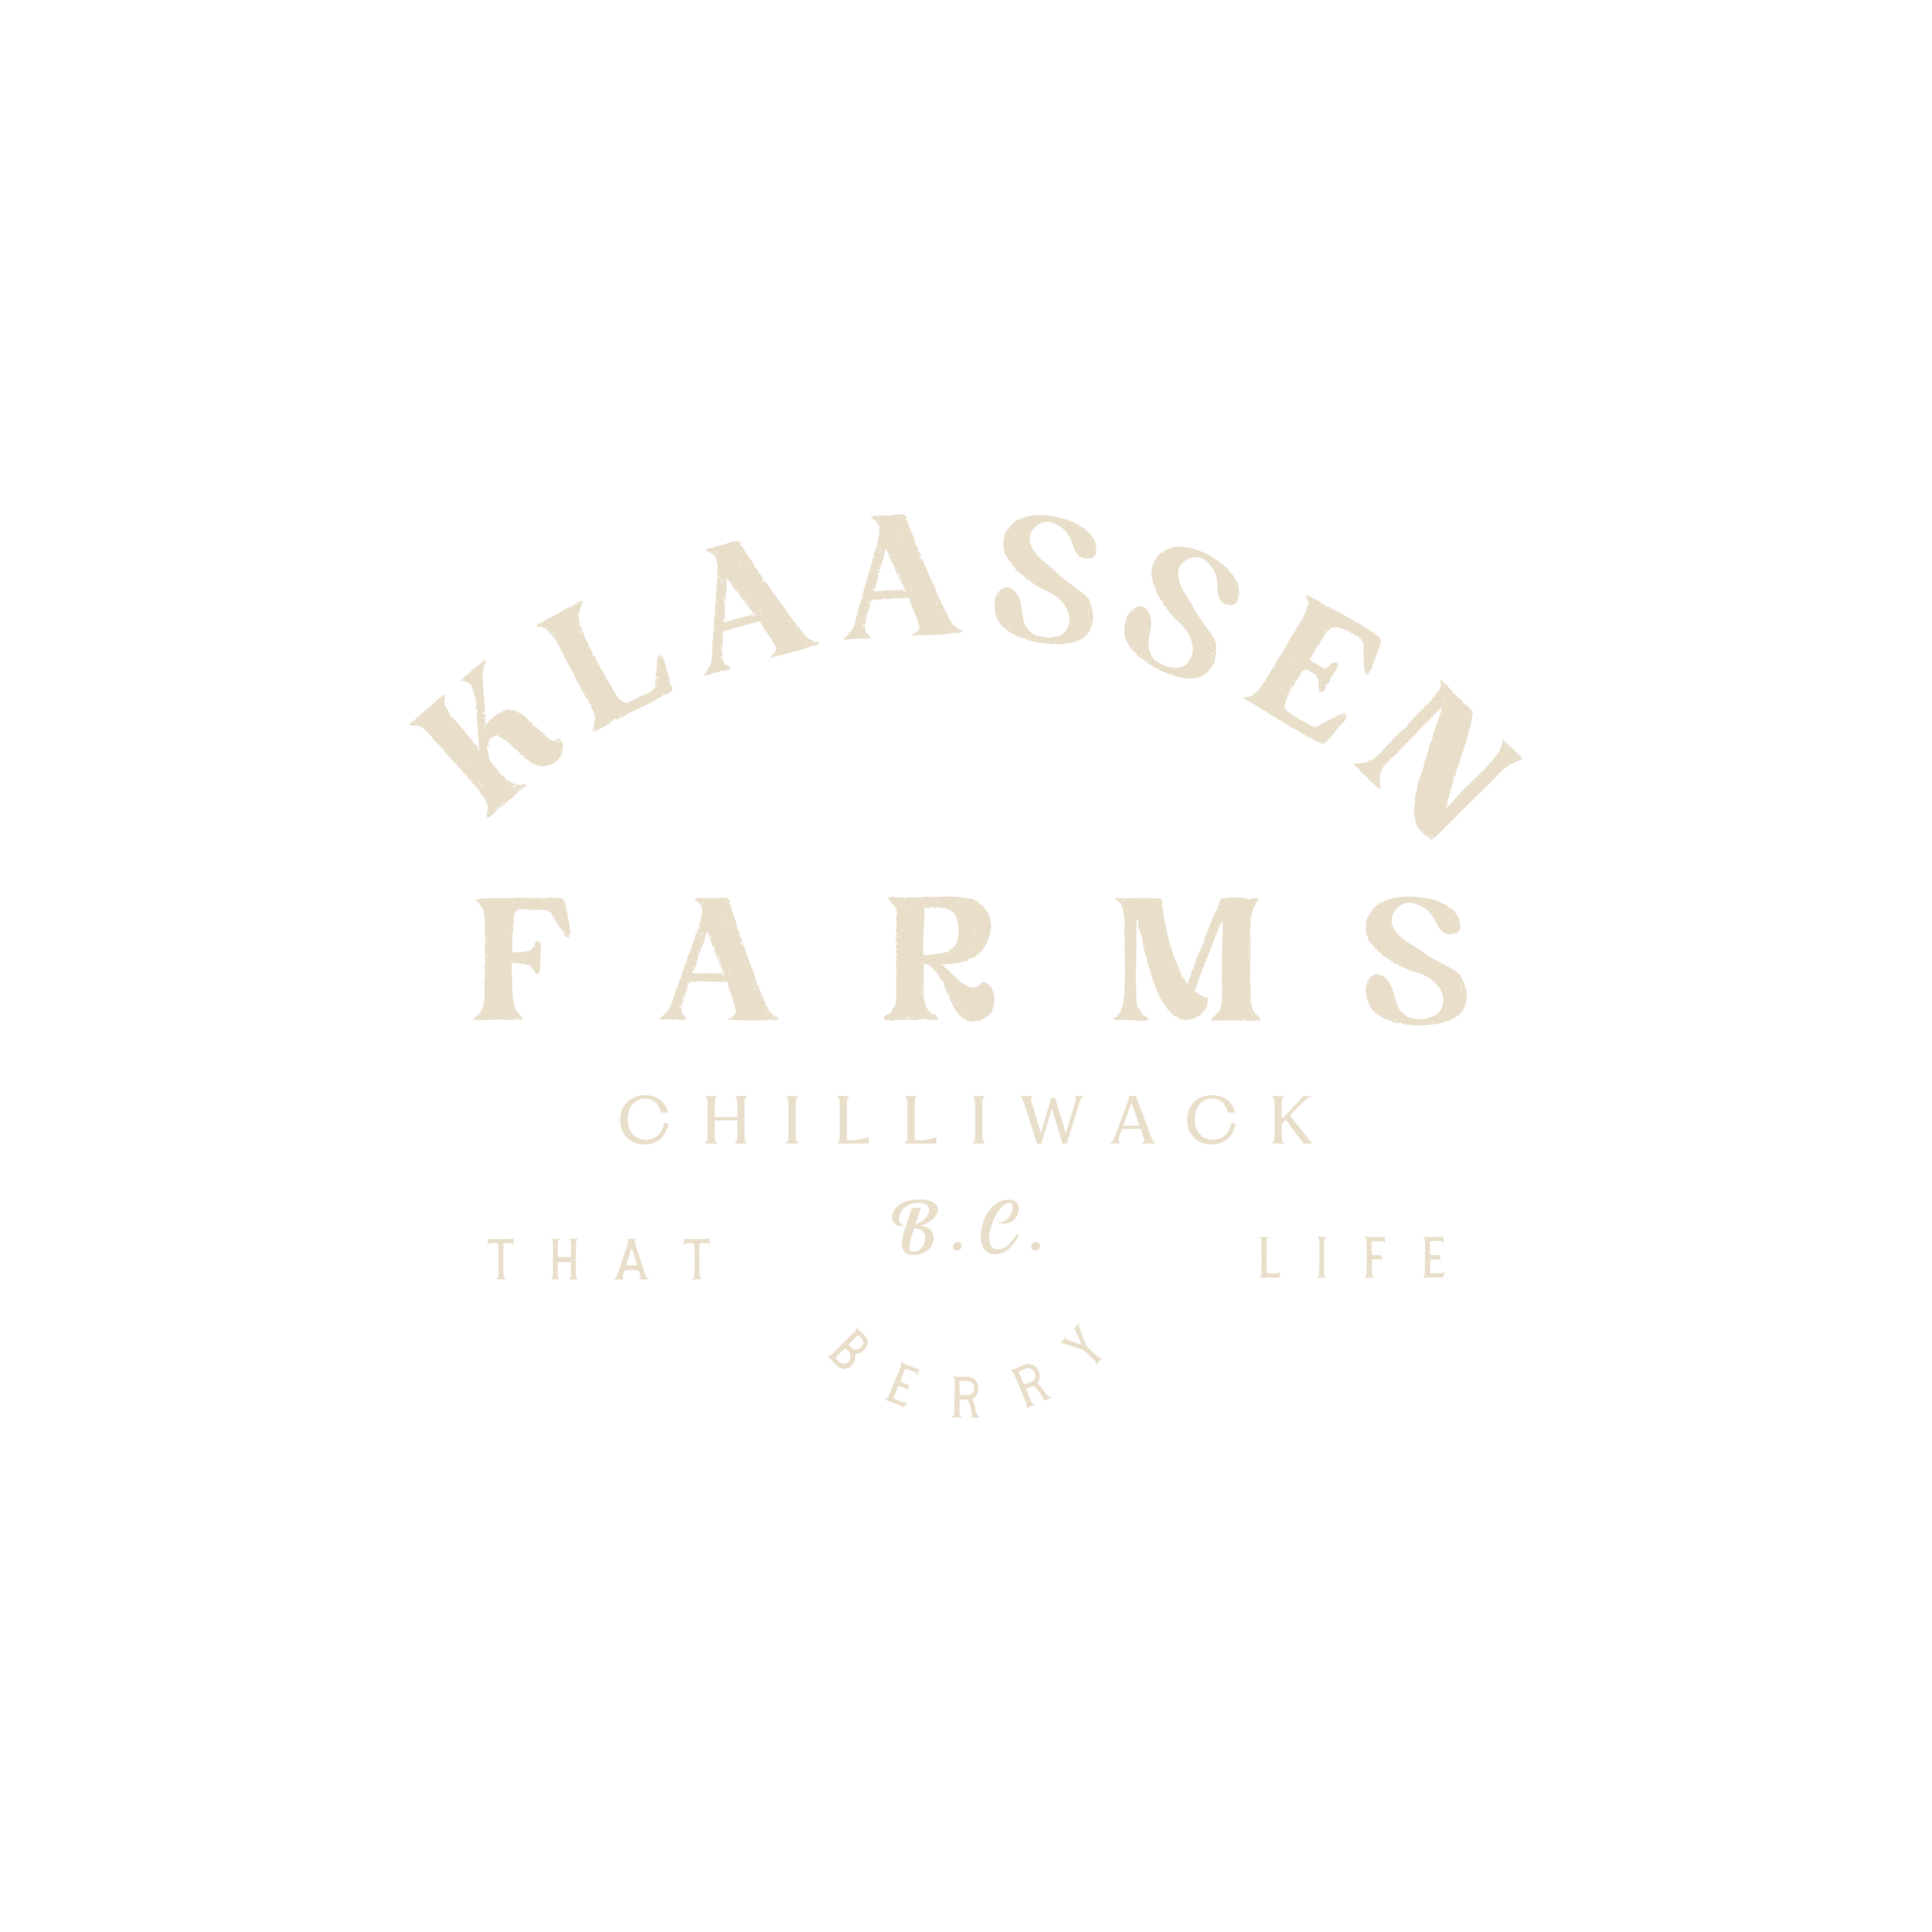 Klaassen Farms